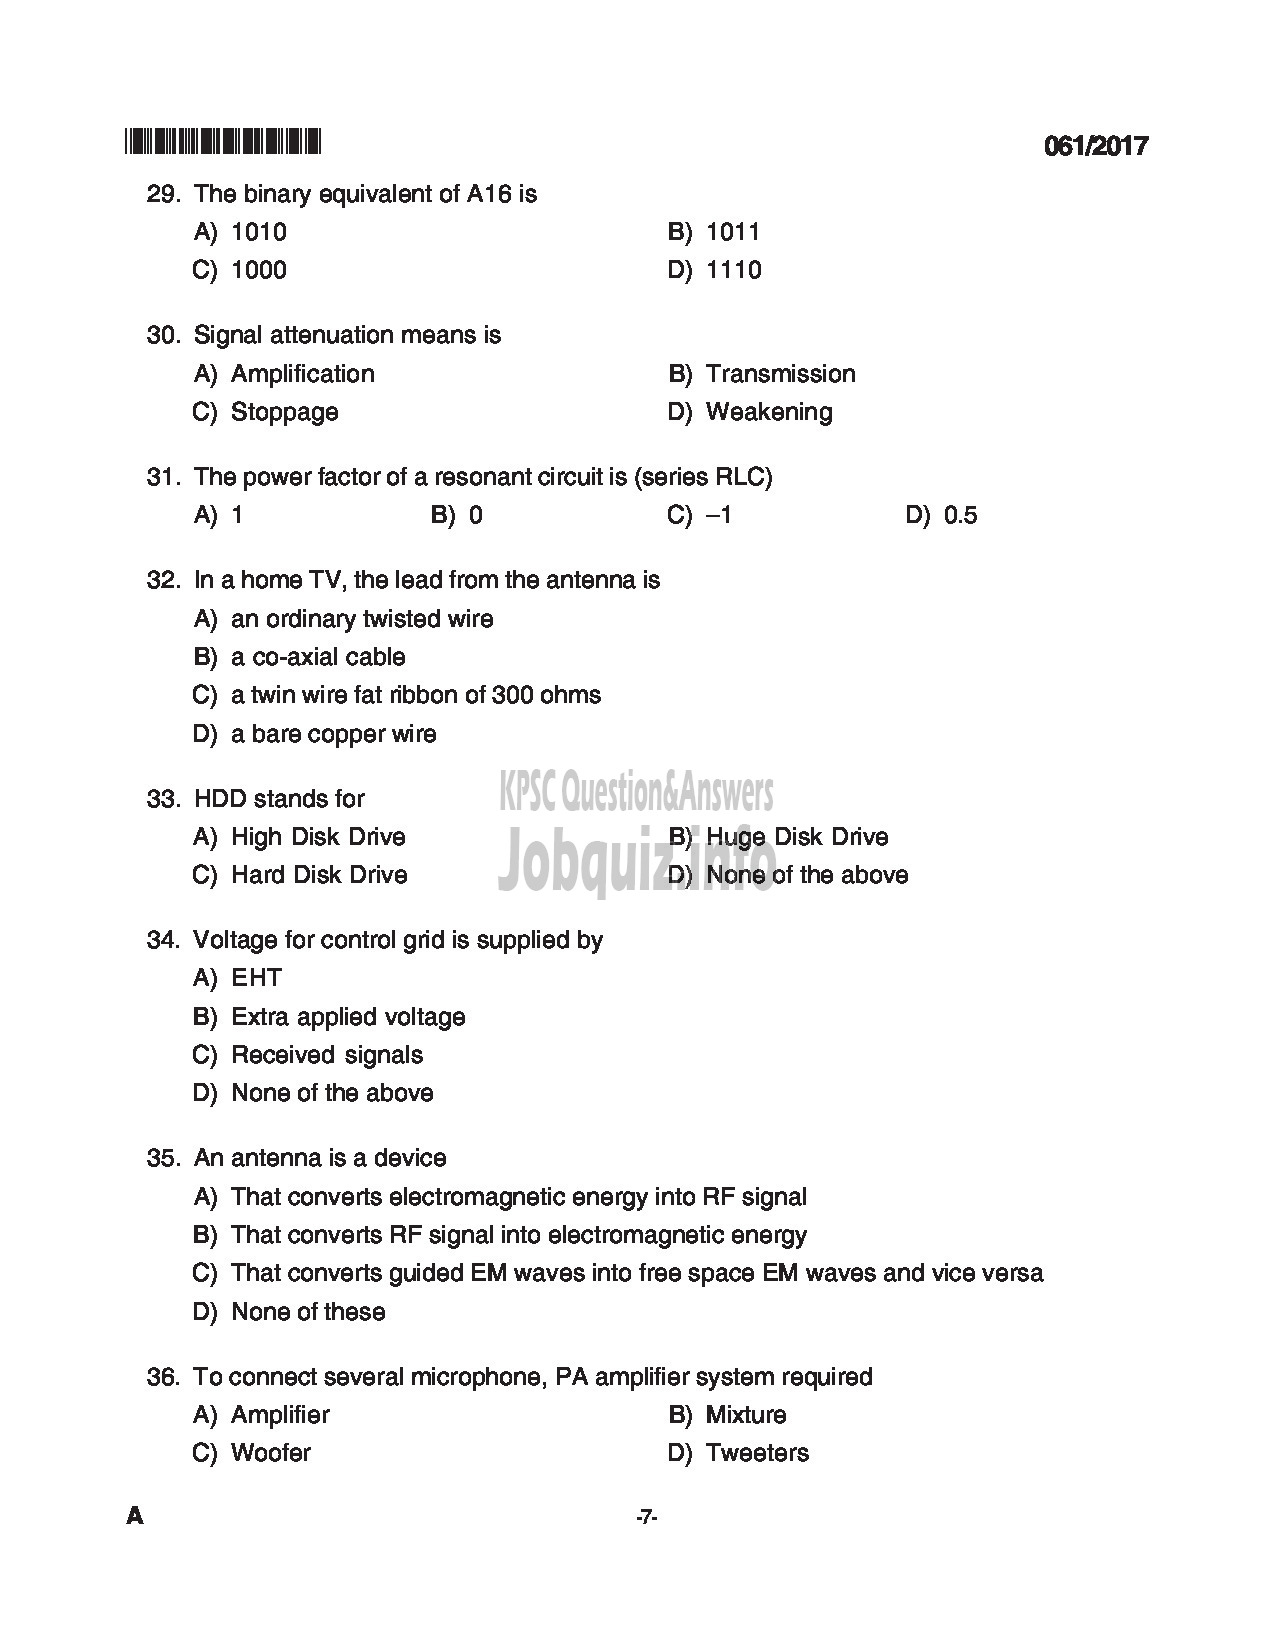 Kerala PSC Question Paper - TRADESMAN ELECTRONICS TECHNICAL EDUCATION QUESTION PAPER-7